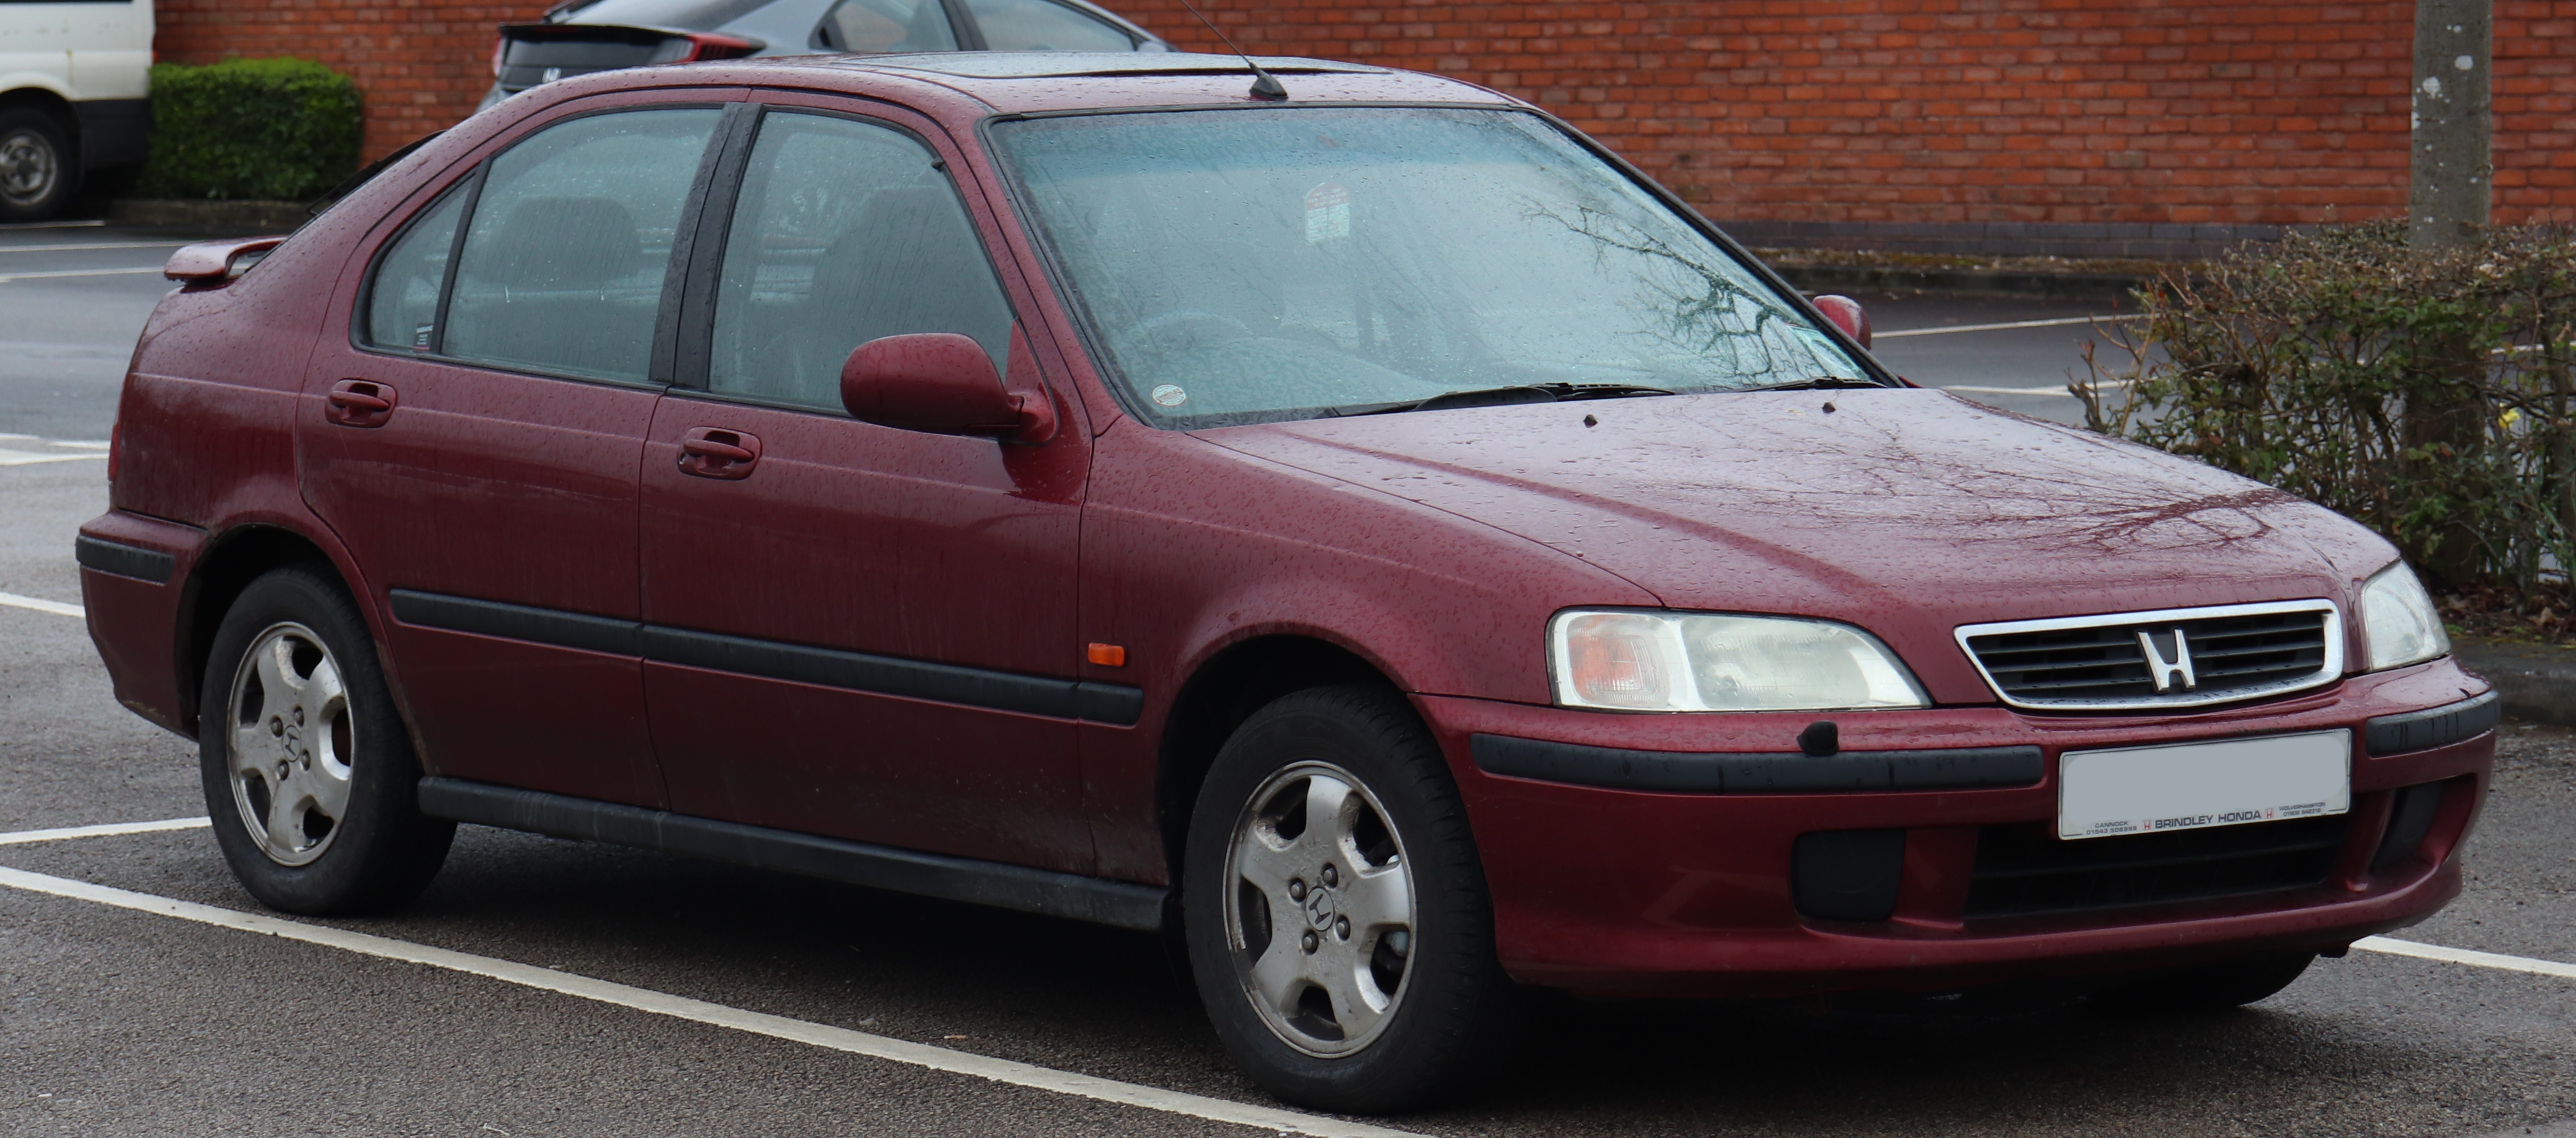 File:1997 Honda Civic ES 1.6 Front.jpg - Wikimedia Commons